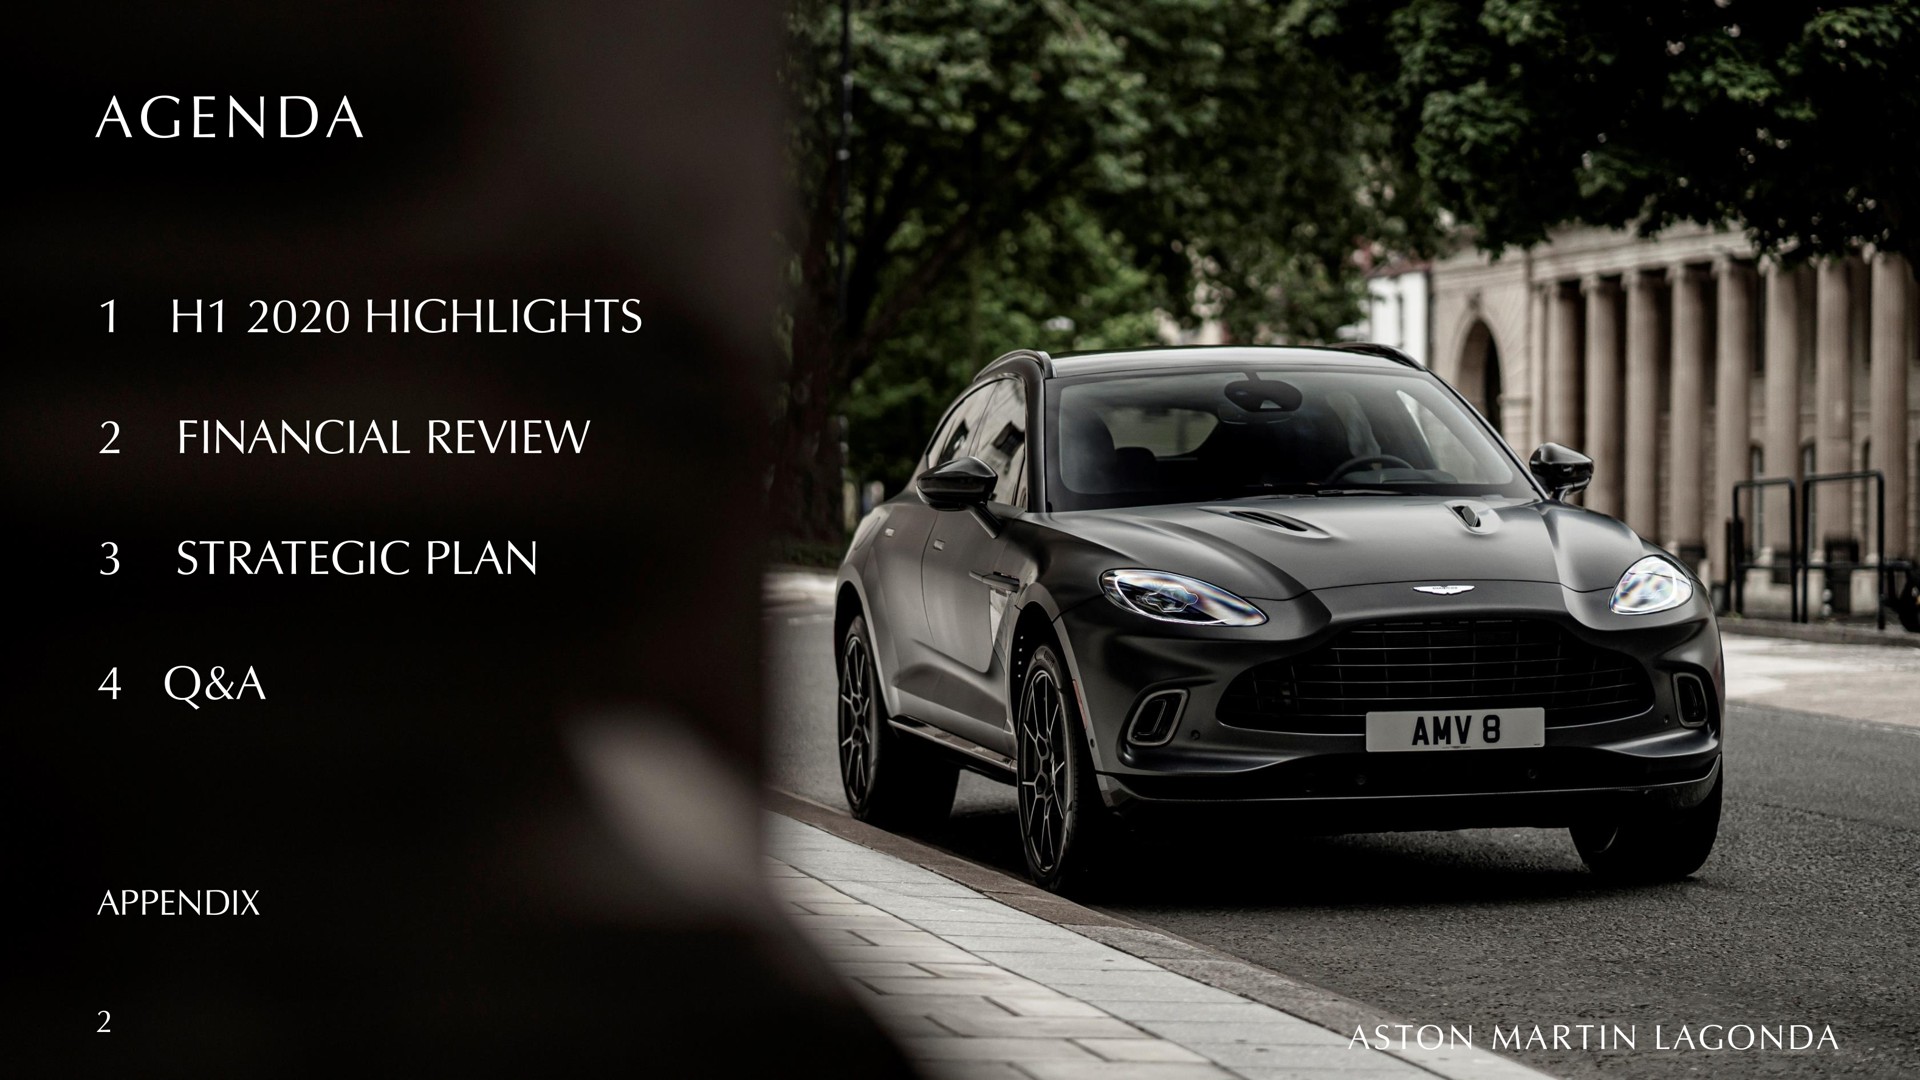 agen see as agenda | Aston Martin Lagonda